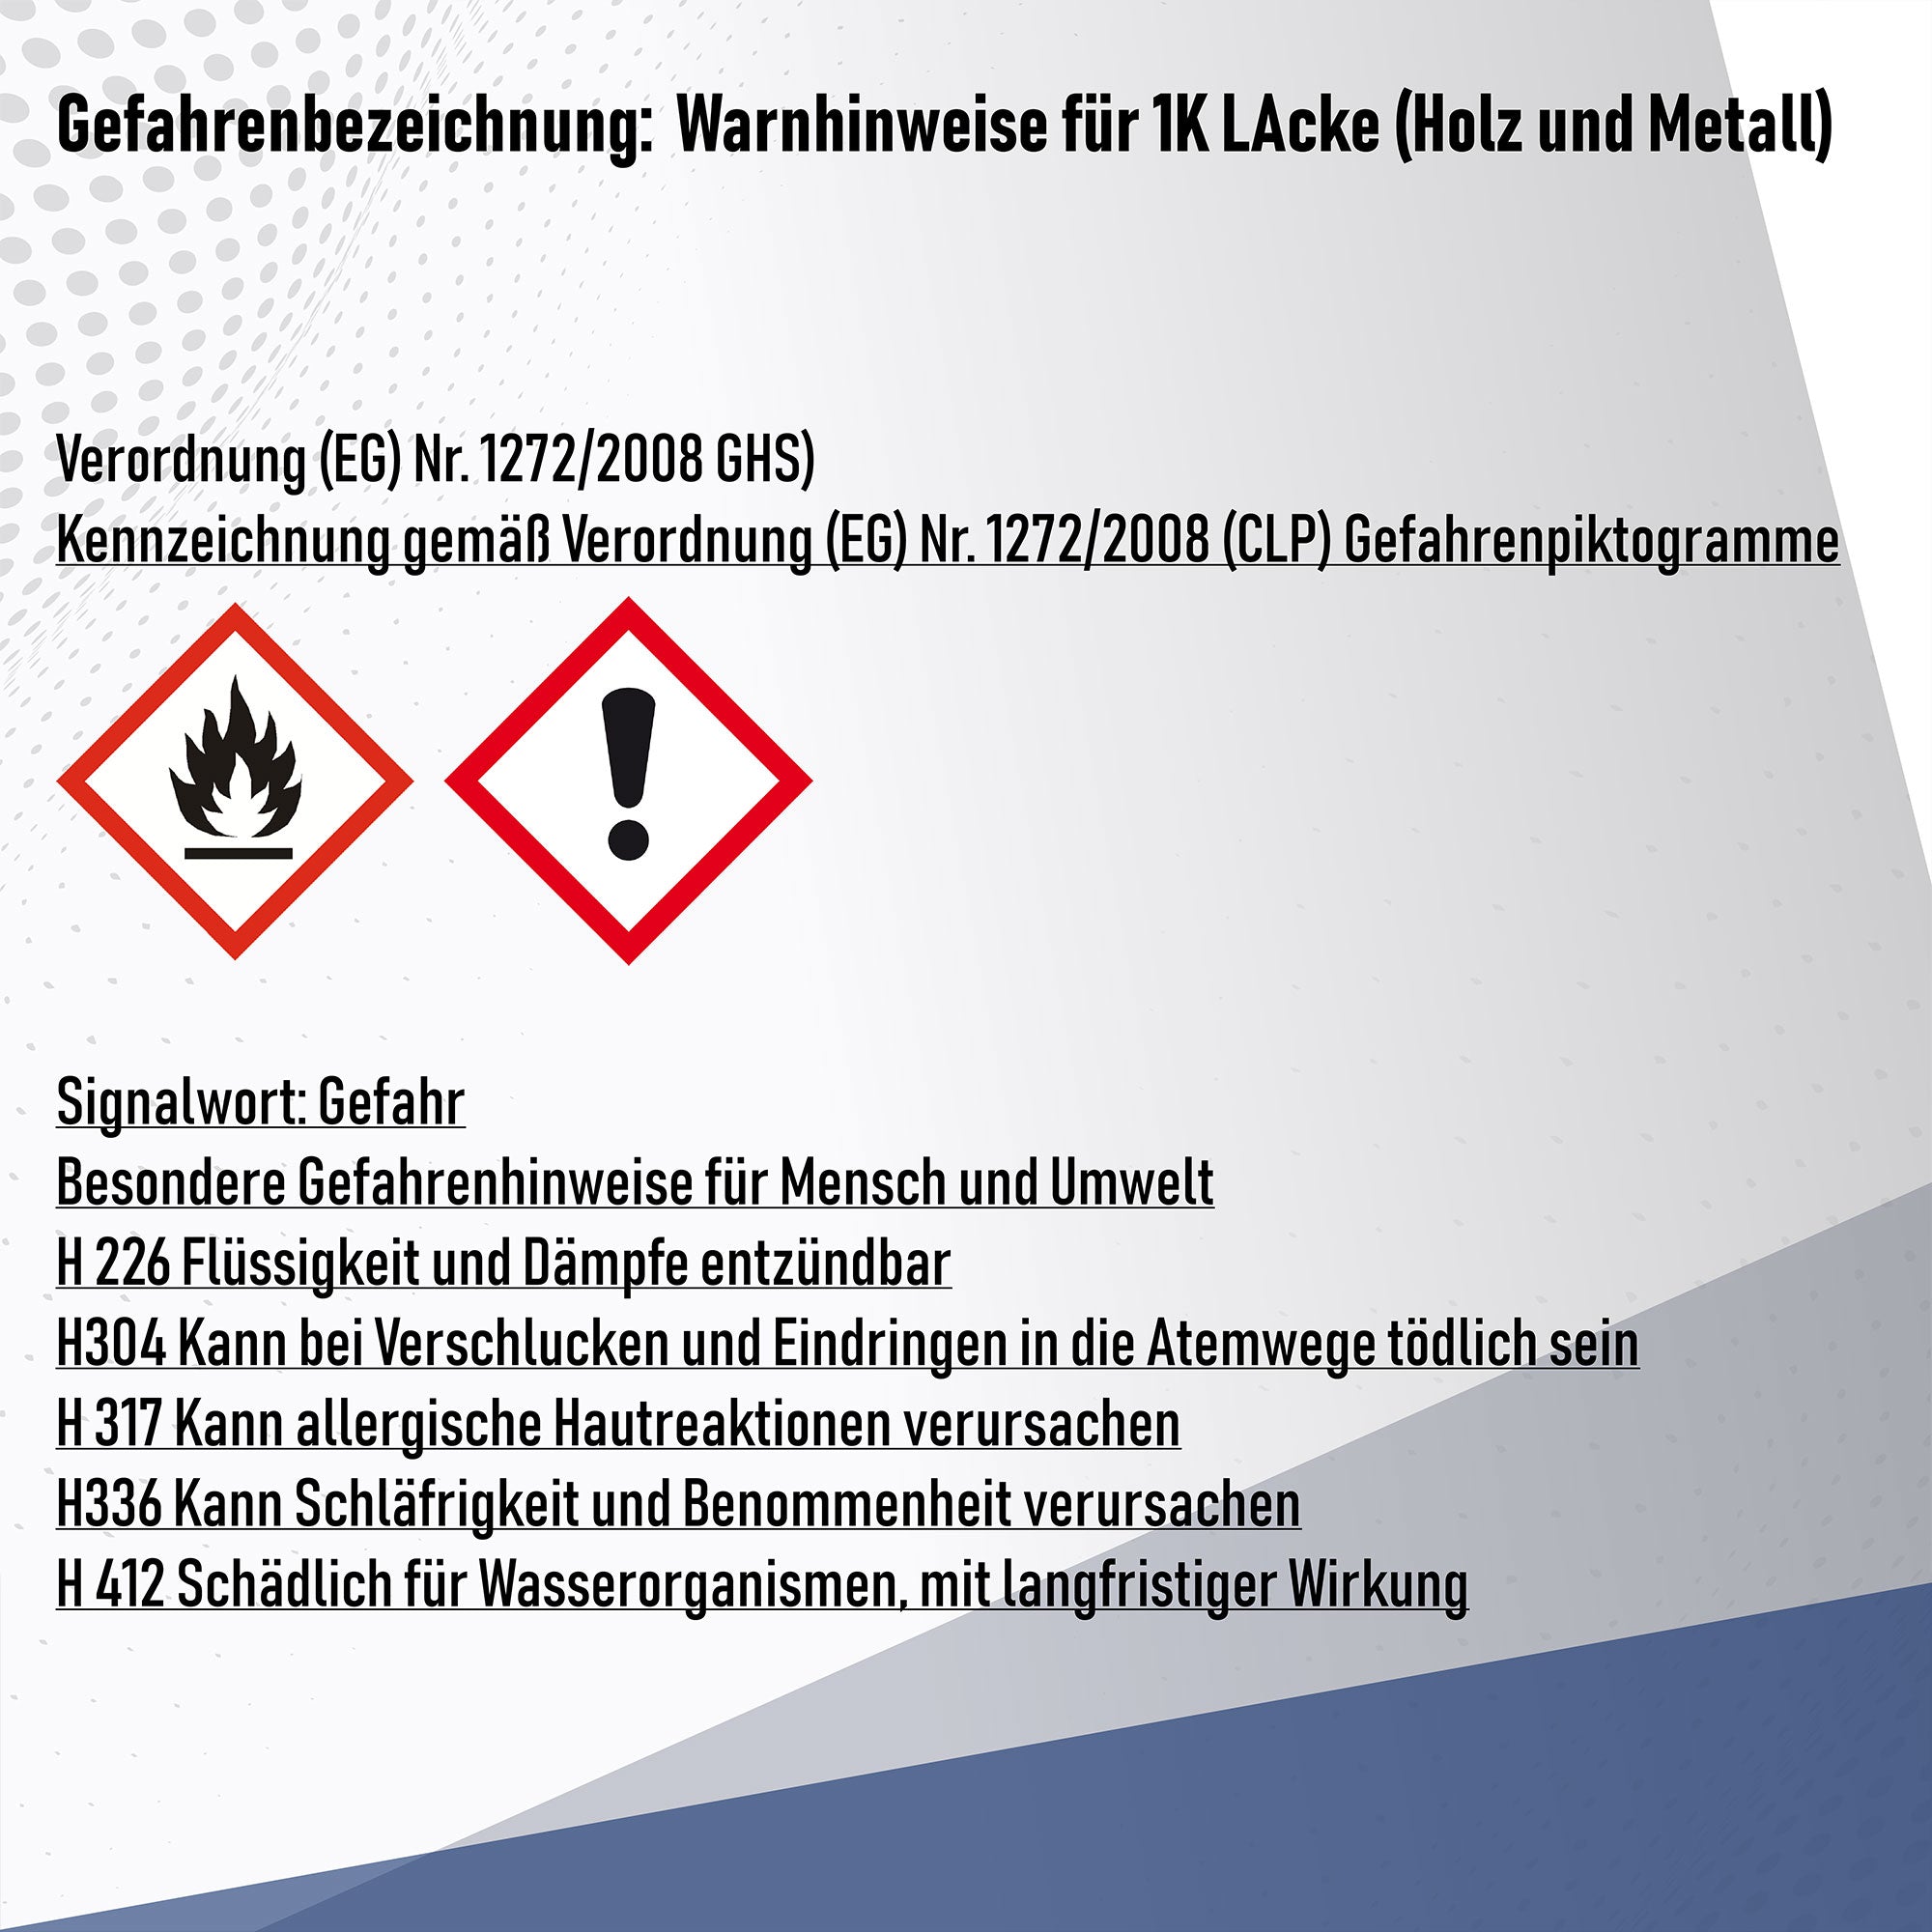 Hamburger Lack-Profi Buntlack in Feuerrot RAL 3000 mit Lackierset (X300) & Verdünnung (1 L) - 30% Sparangebot